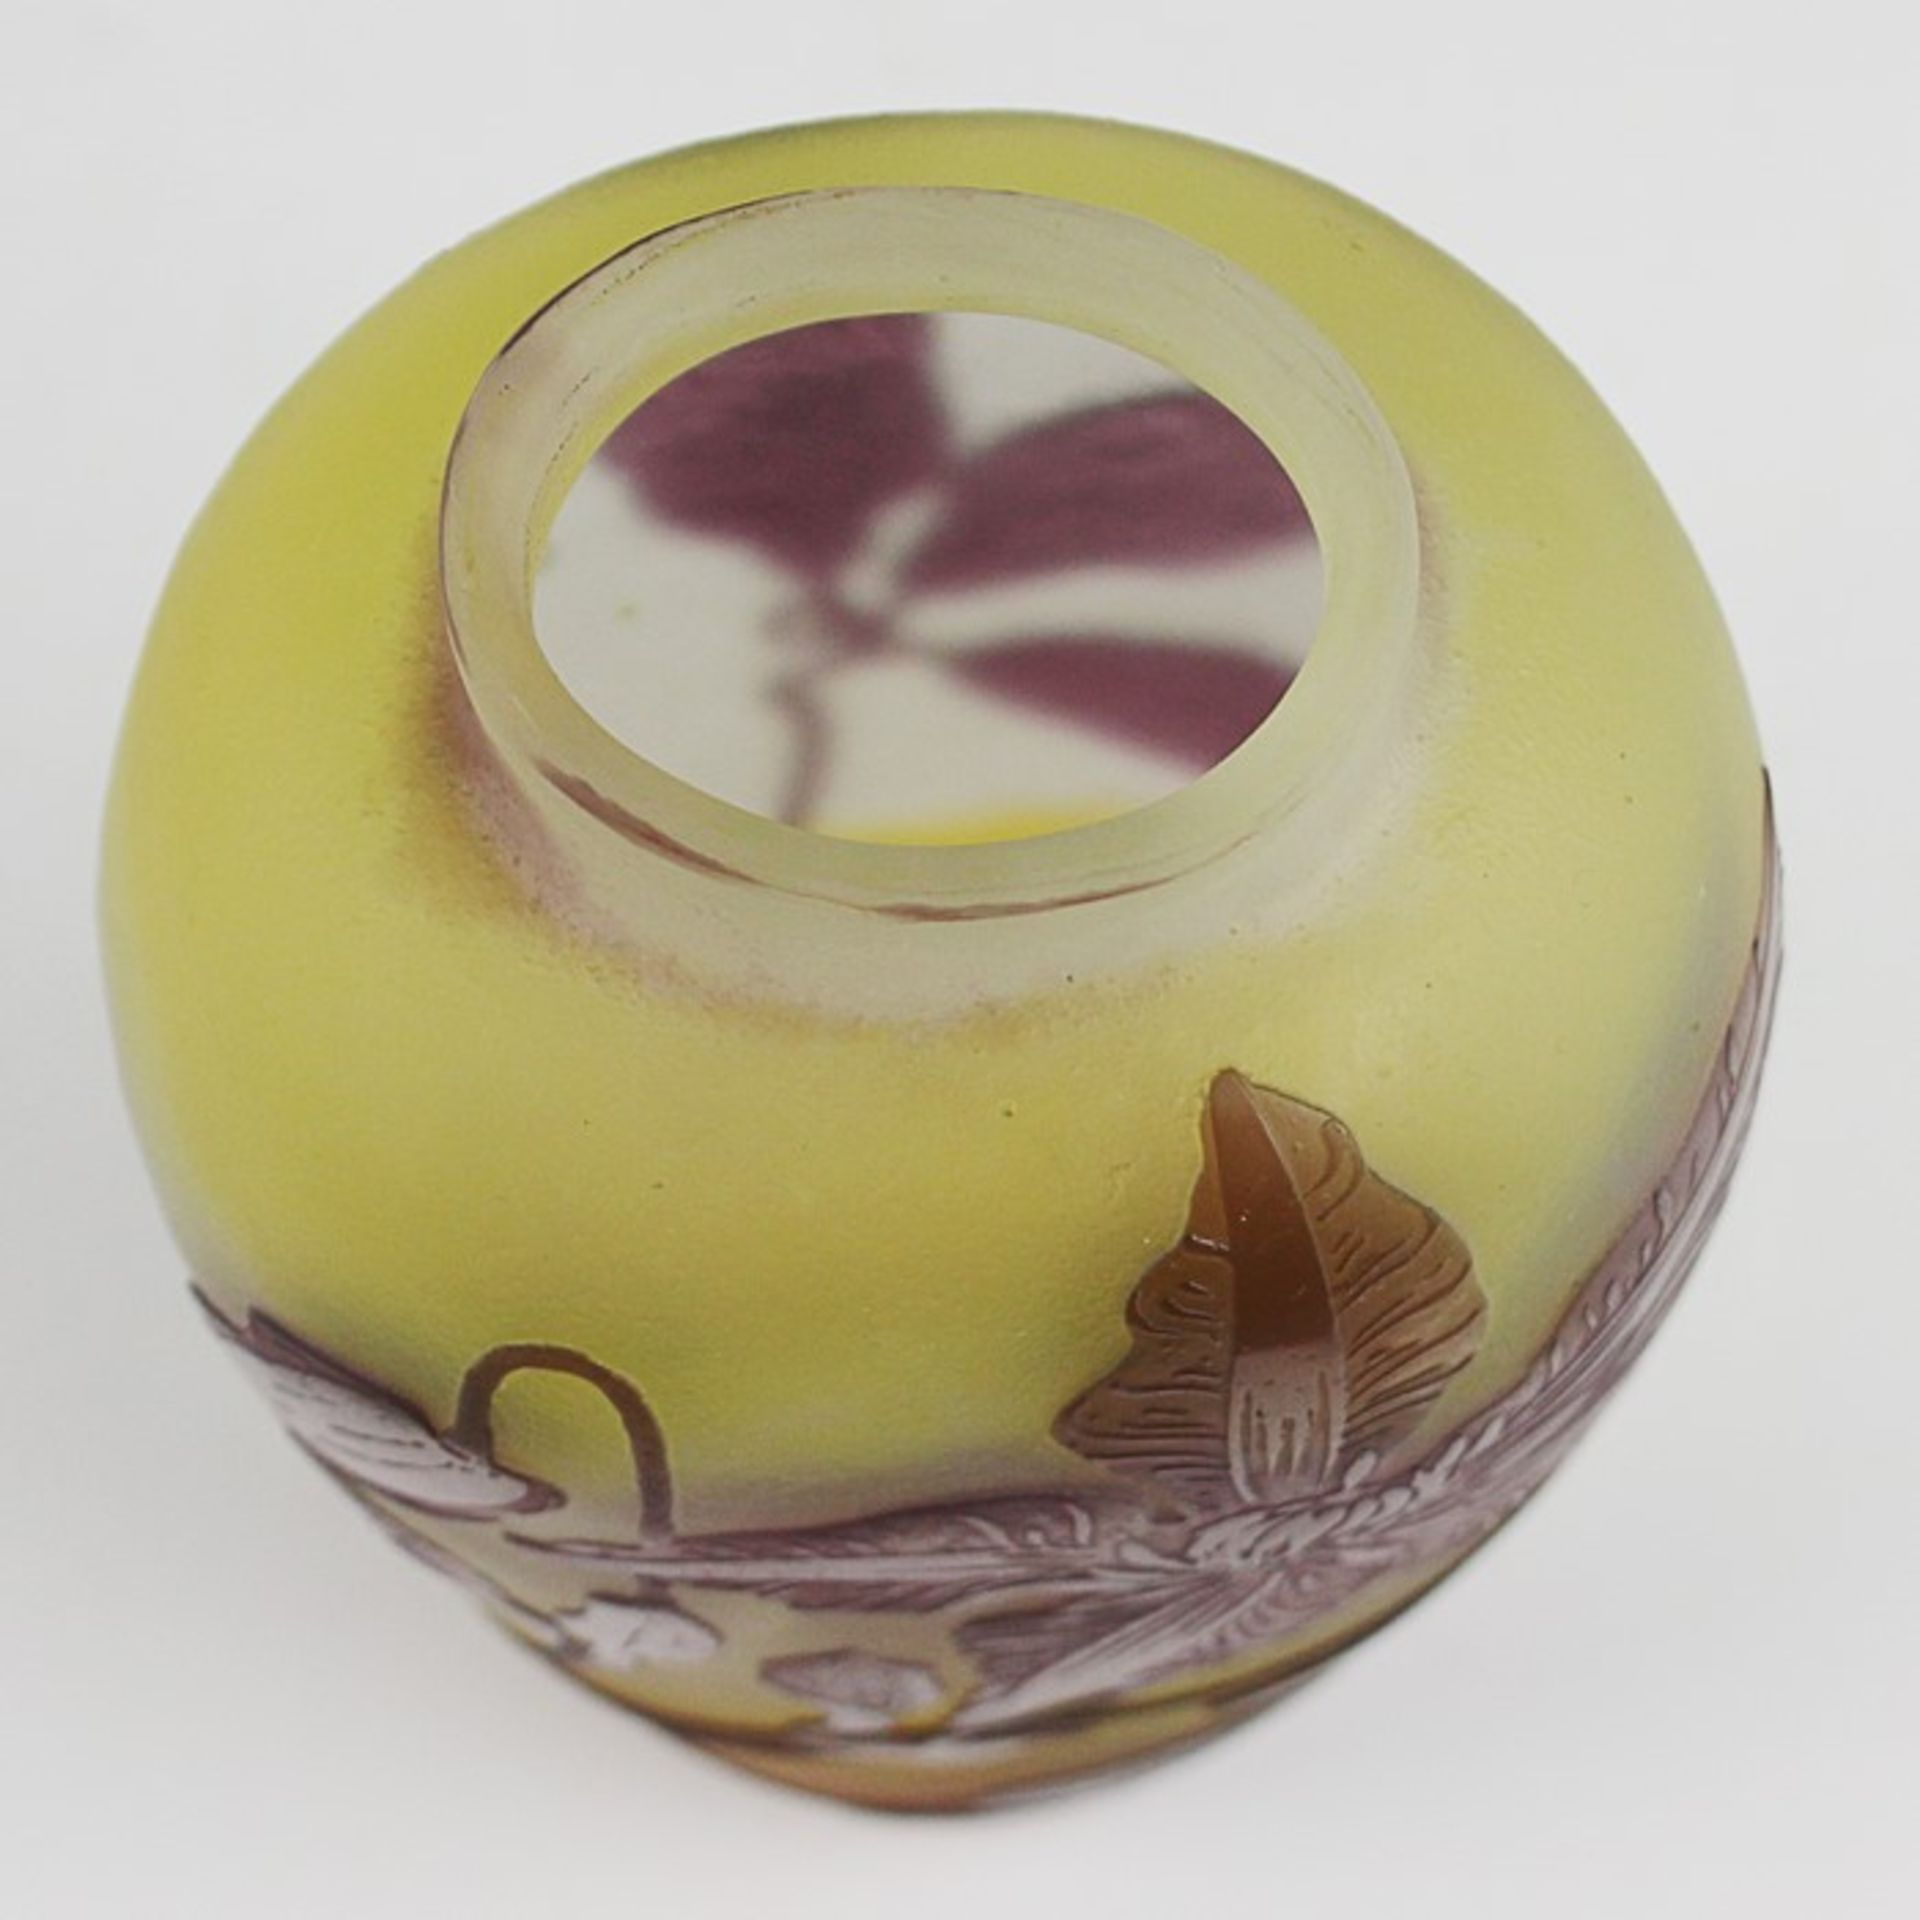 Gallé - Vase1920, Jugendstil, Emile Gallé, Frankreich, farbloses Glas, runder Stand, ovoider, leicht - Bild 6 aus 6